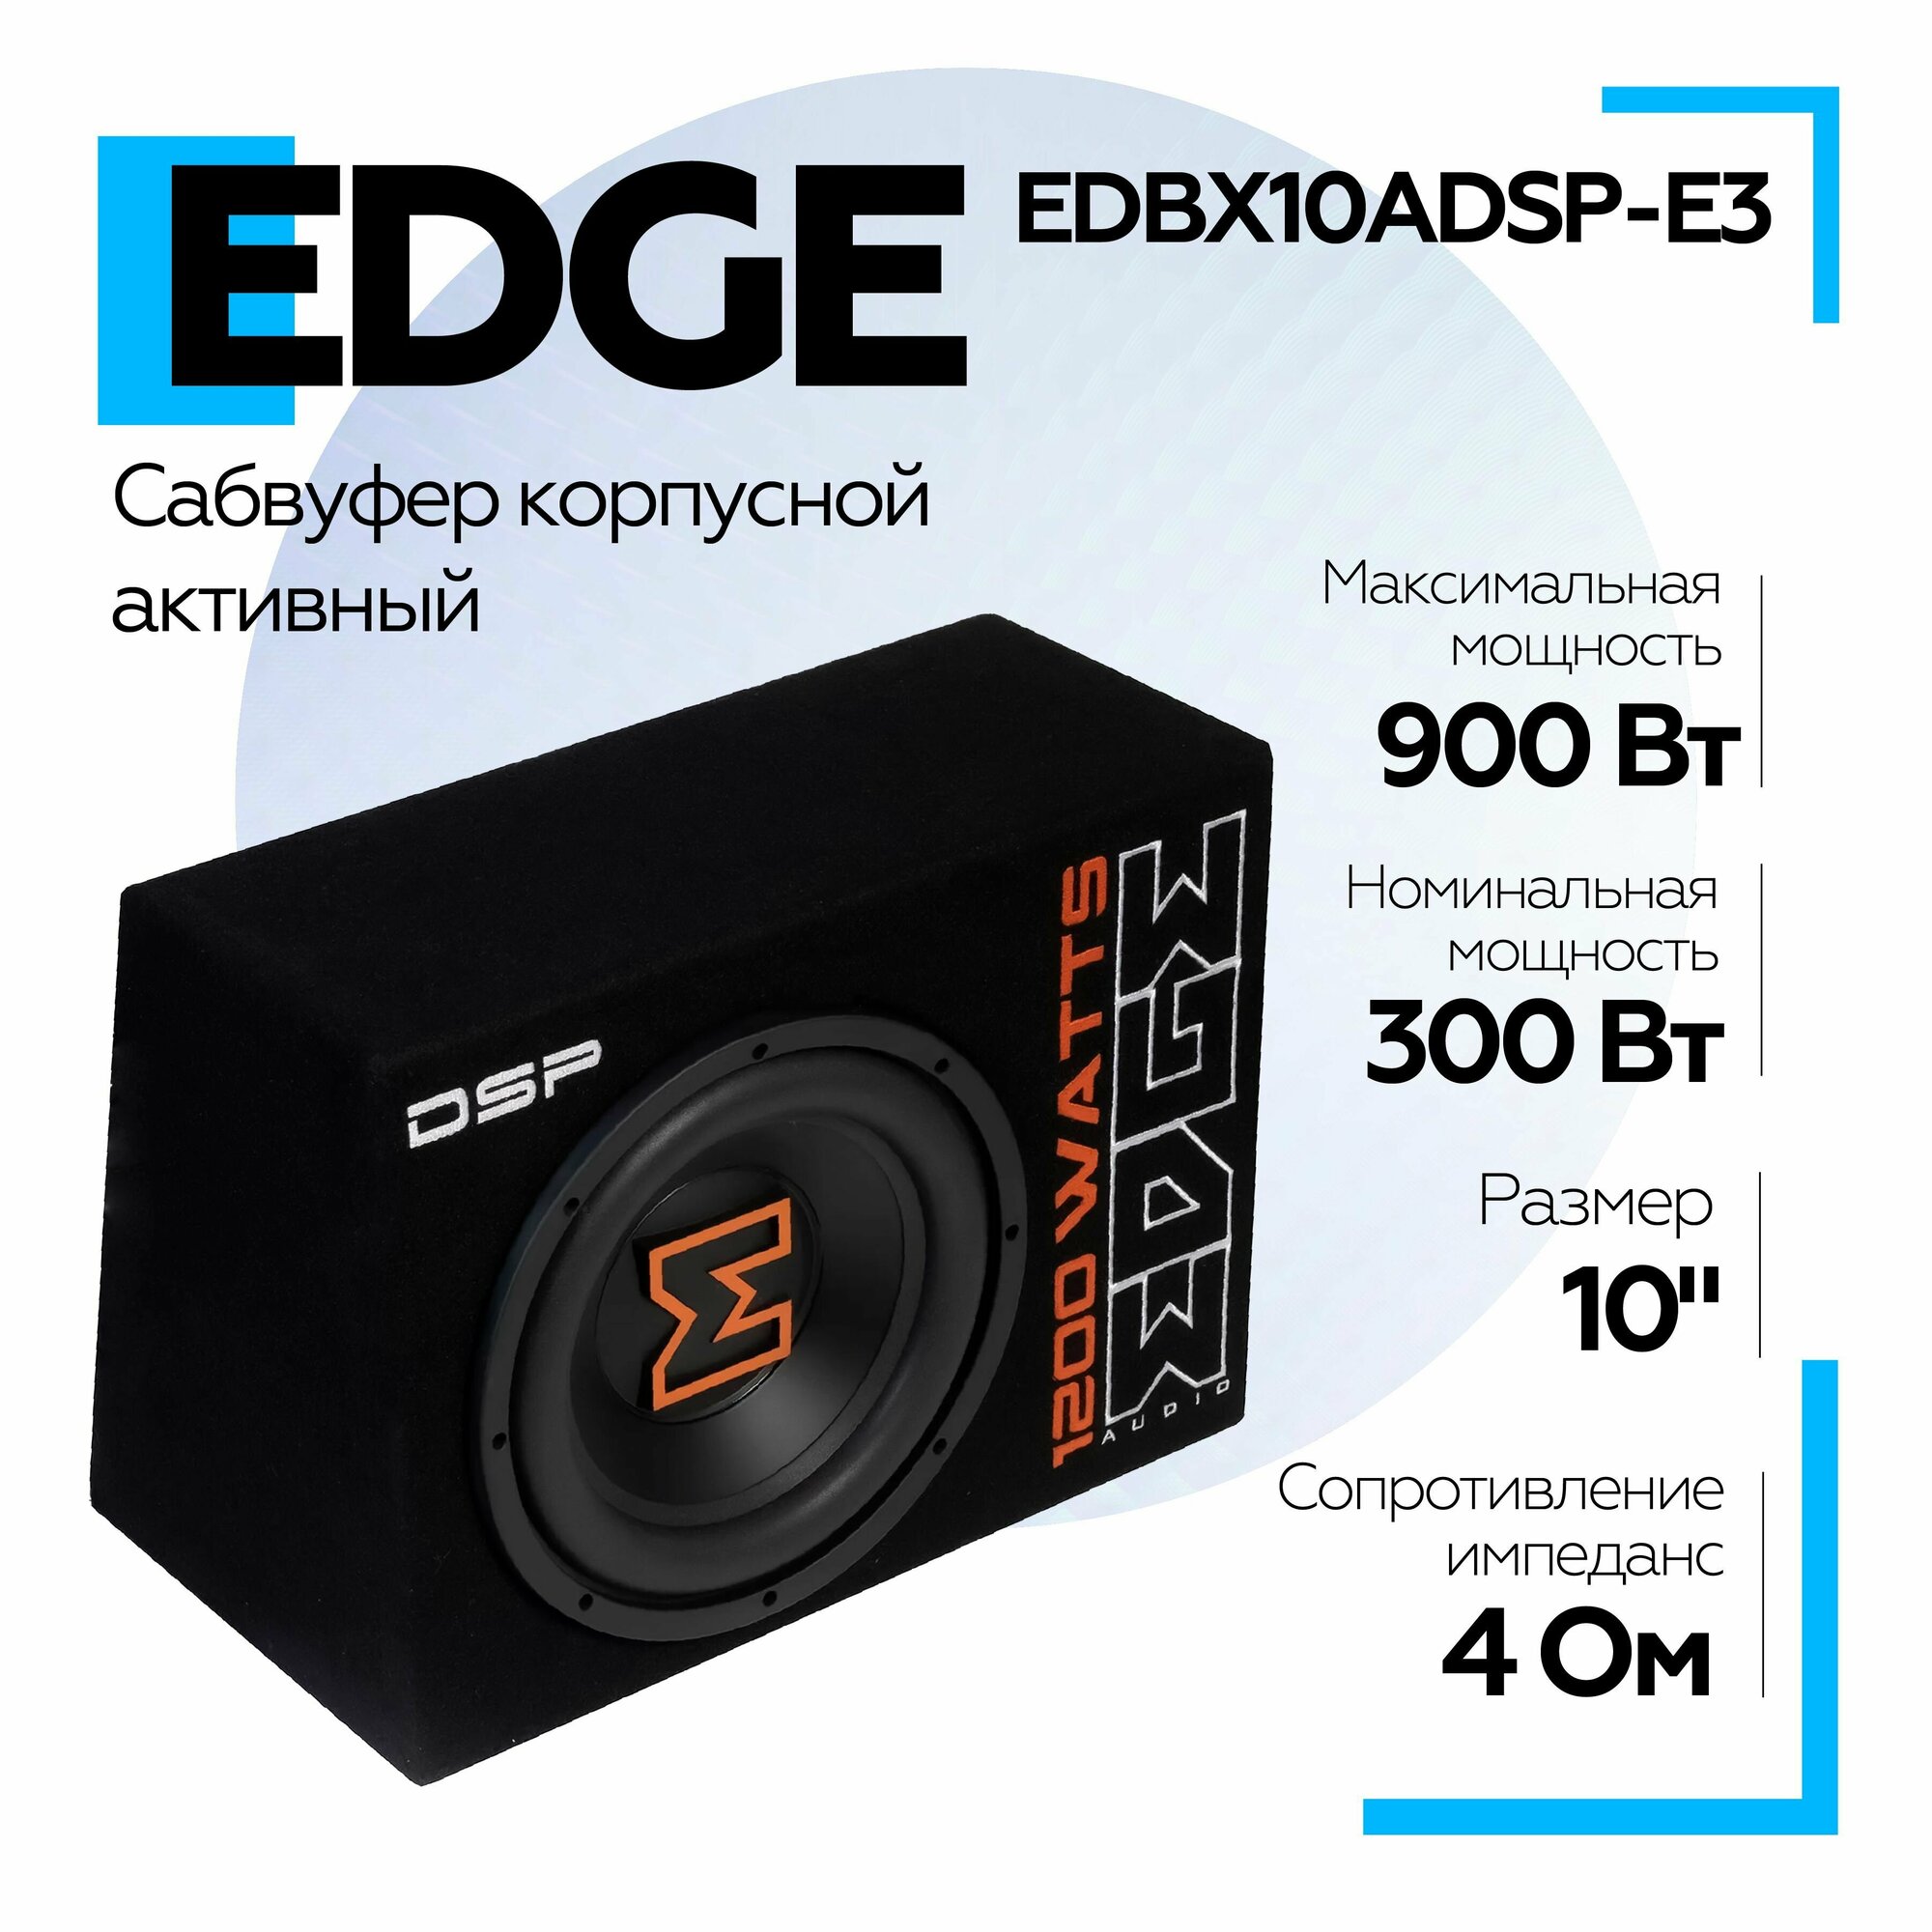 Сабвуфер EDGE EDBX10ADSP-E3 корпусный активный